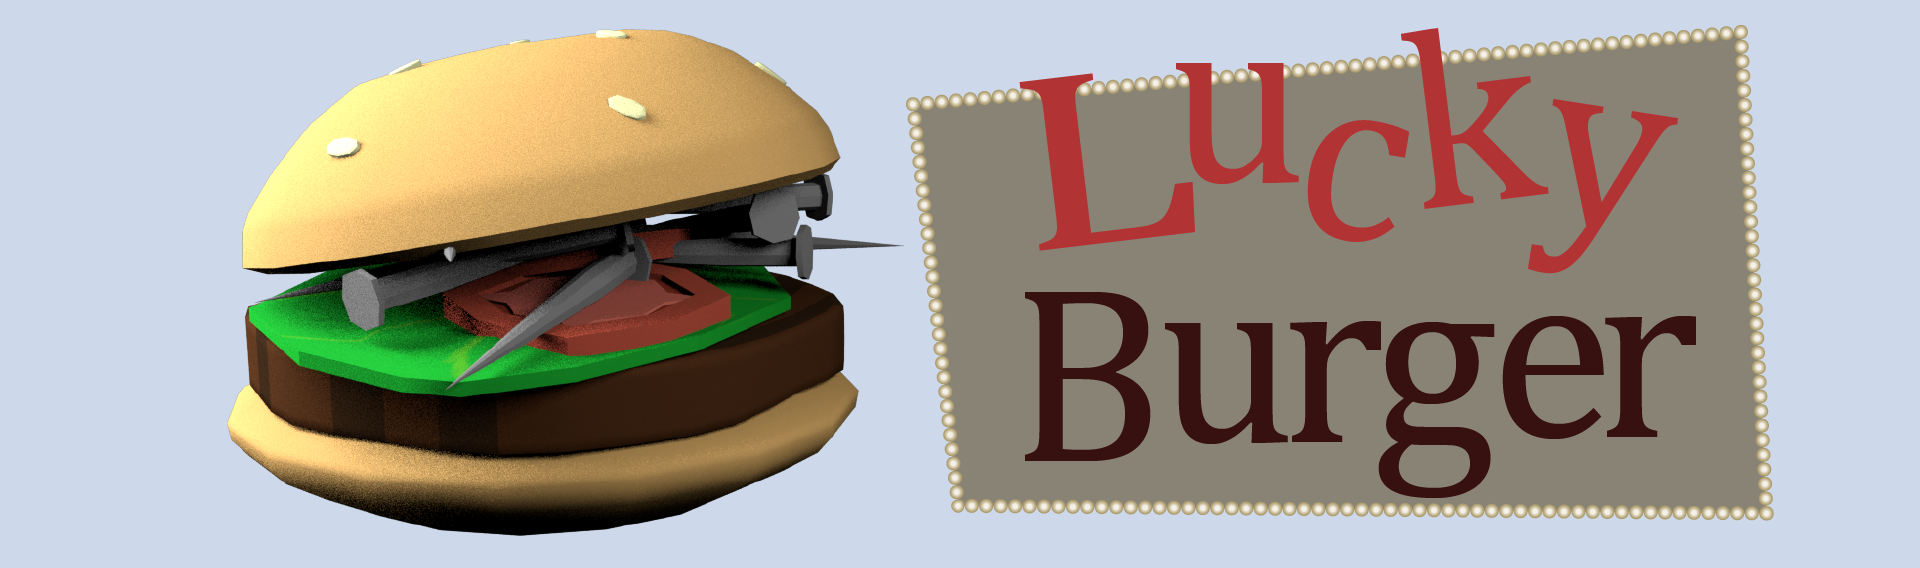 Lucky Burger